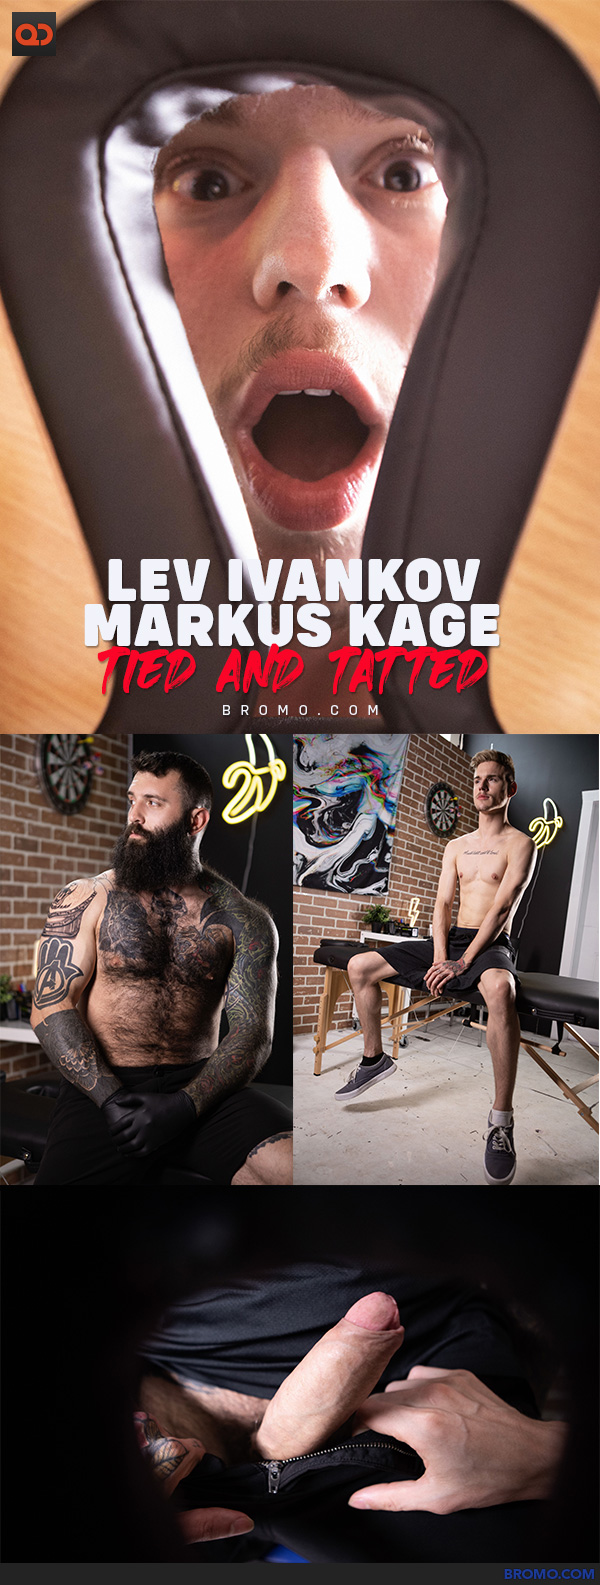 Bromo.com: Lev Ivankov and Markus Kage